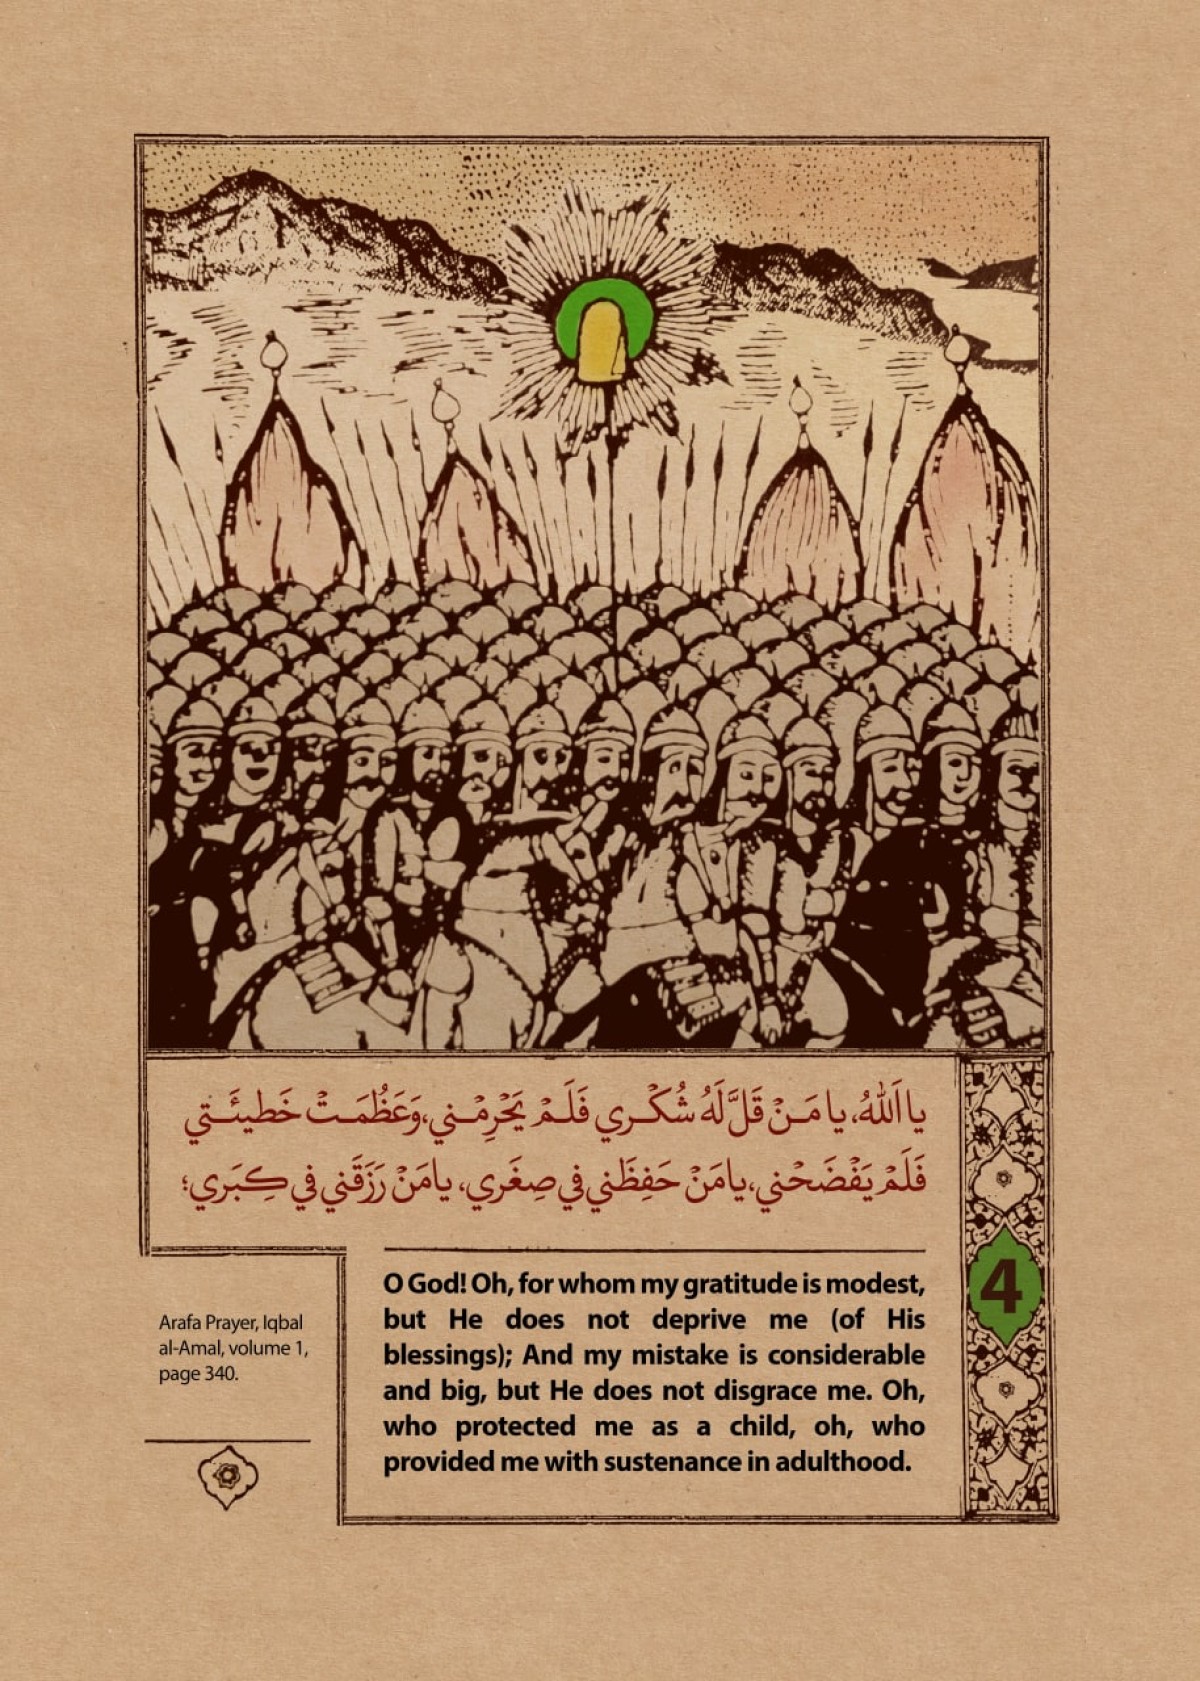 Arafa Prayer, Iqbal al-Amal, volume 1, page 340 _2